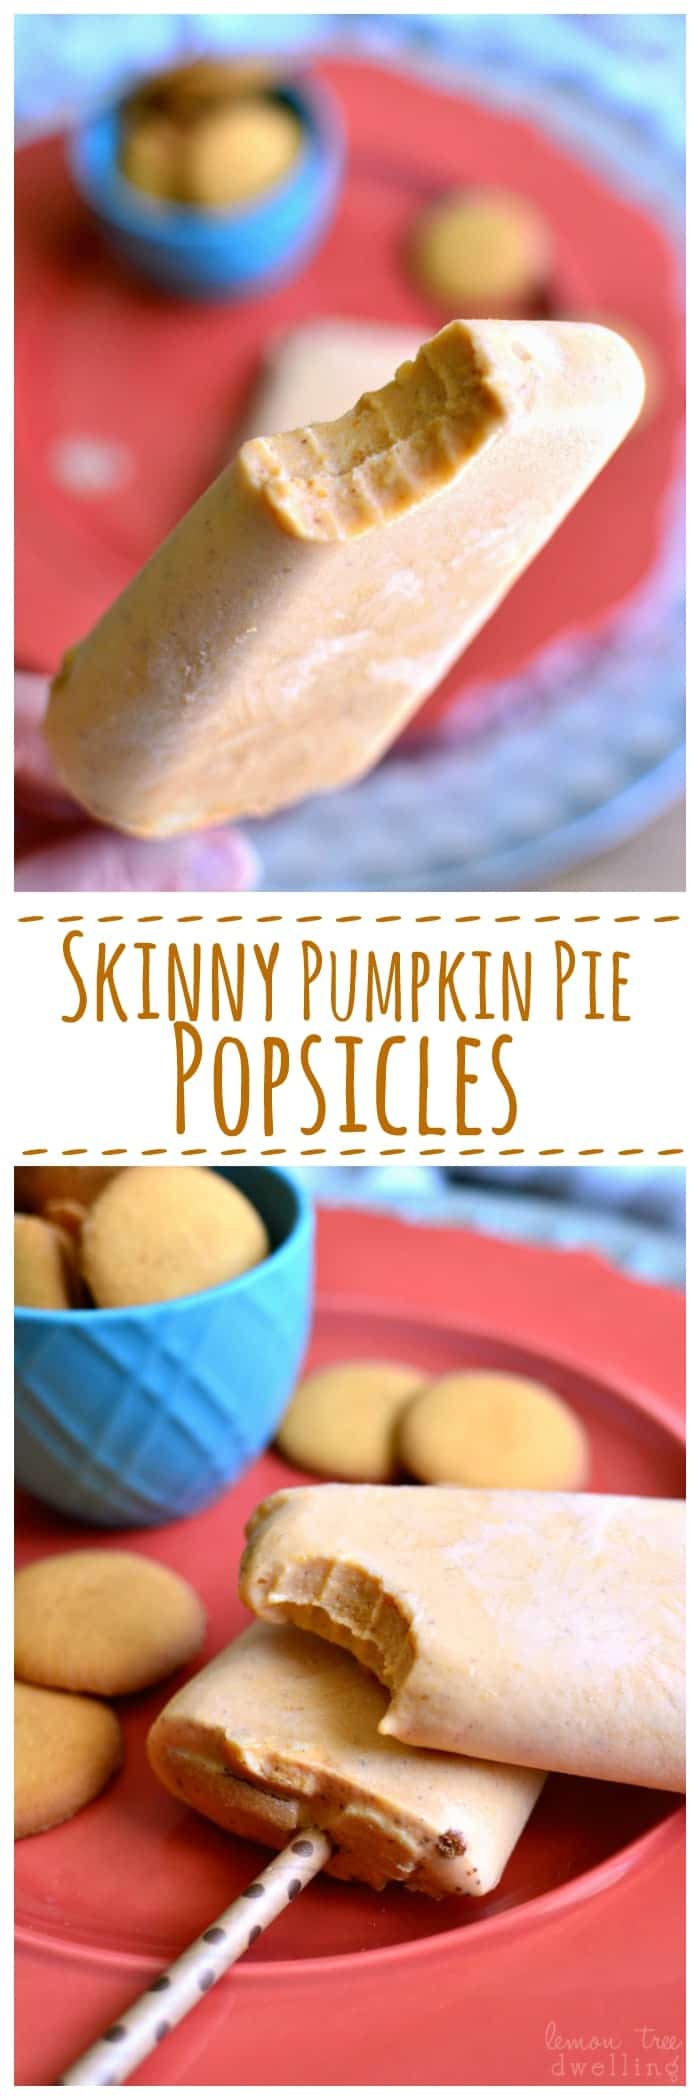 Skinny Pumpkin Pie Popsicles | Lemon Tree Dwelling